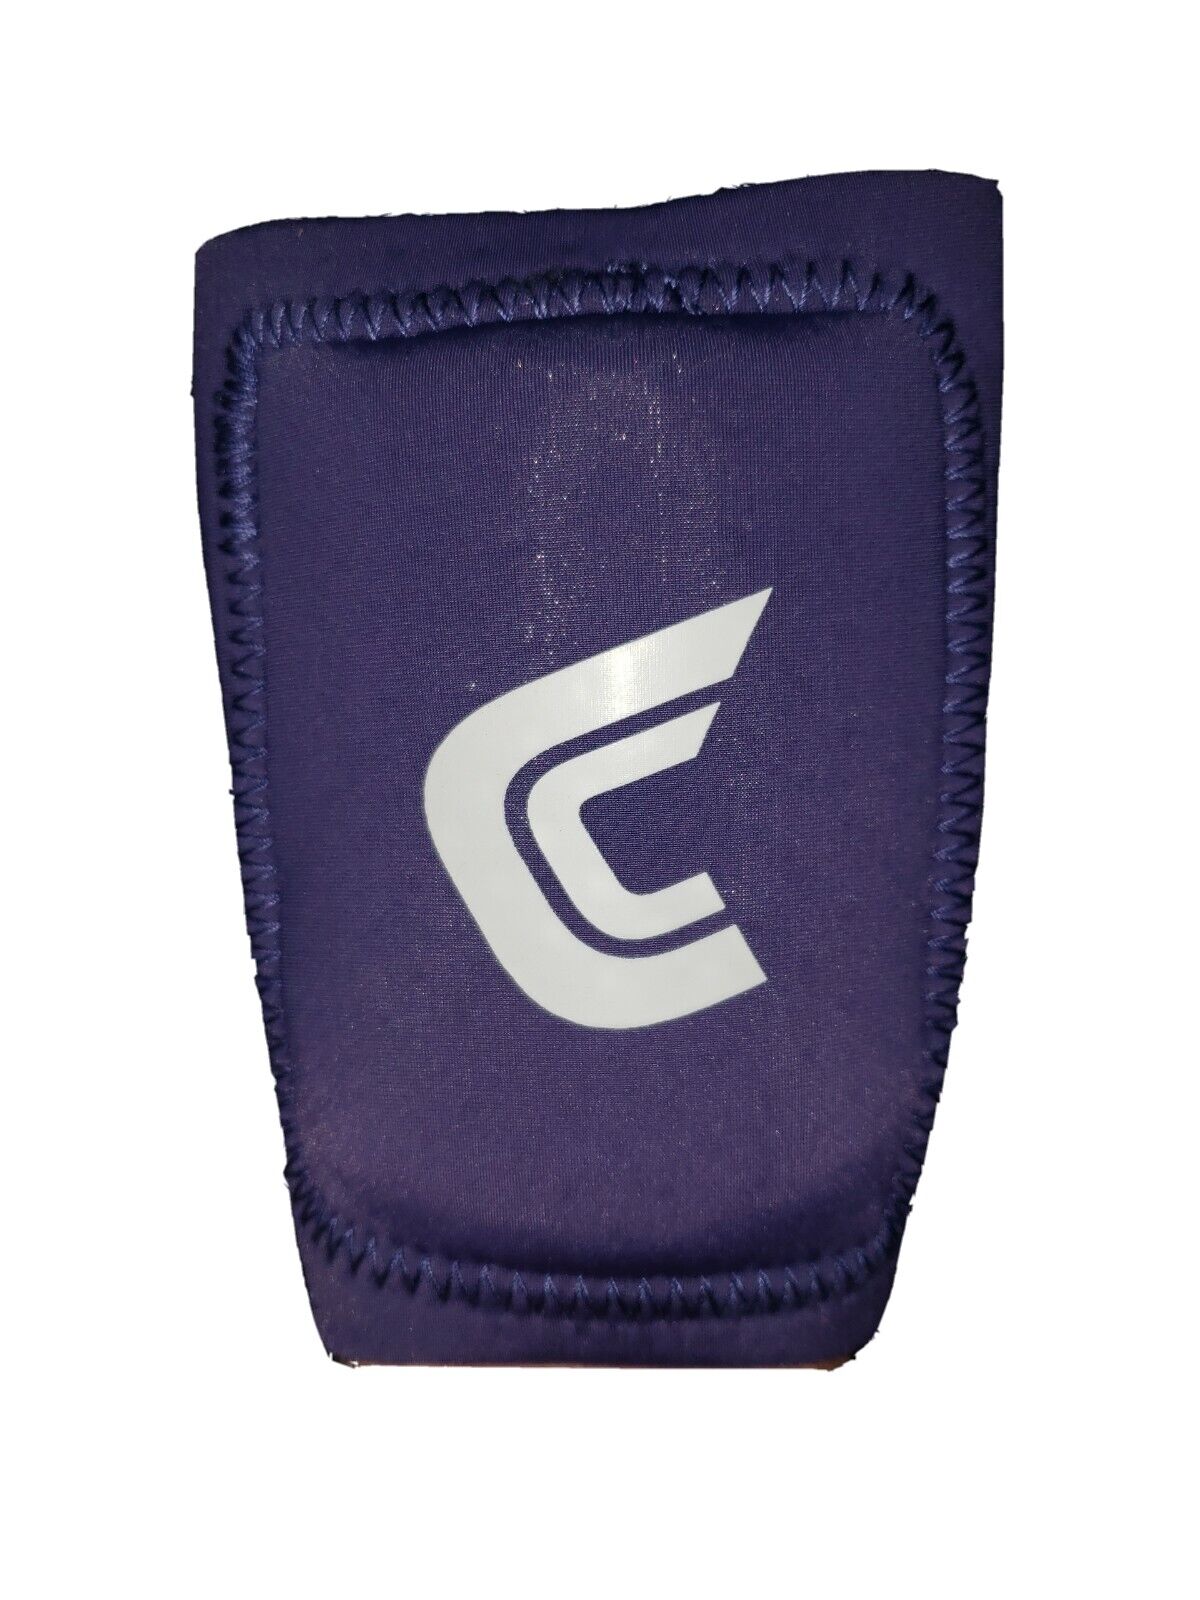 New Cutters Baseball Ultra Compression Wrist Guard *purple Xl*